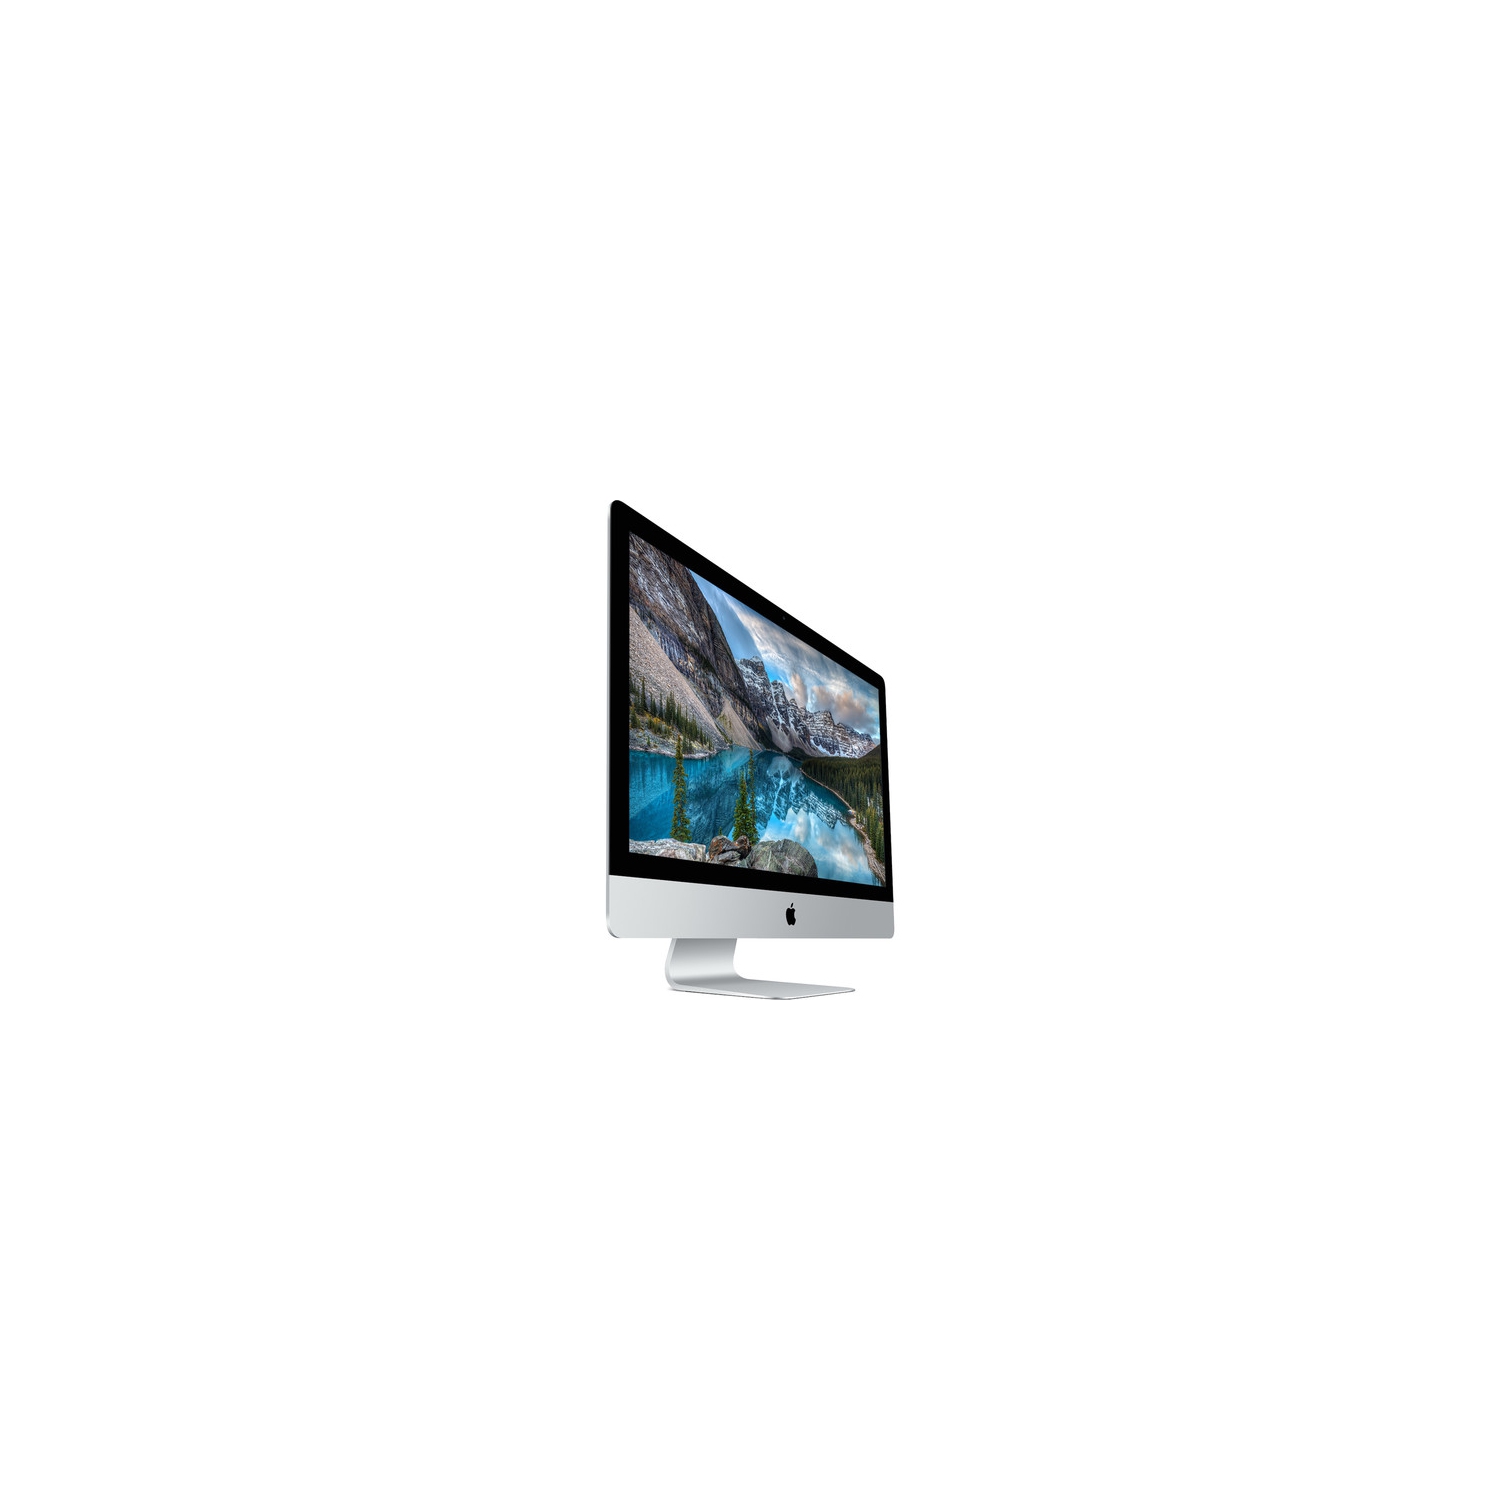 Refurbished (Good) - Apple iMac (Retina 5K, 27-inch, Late 2015